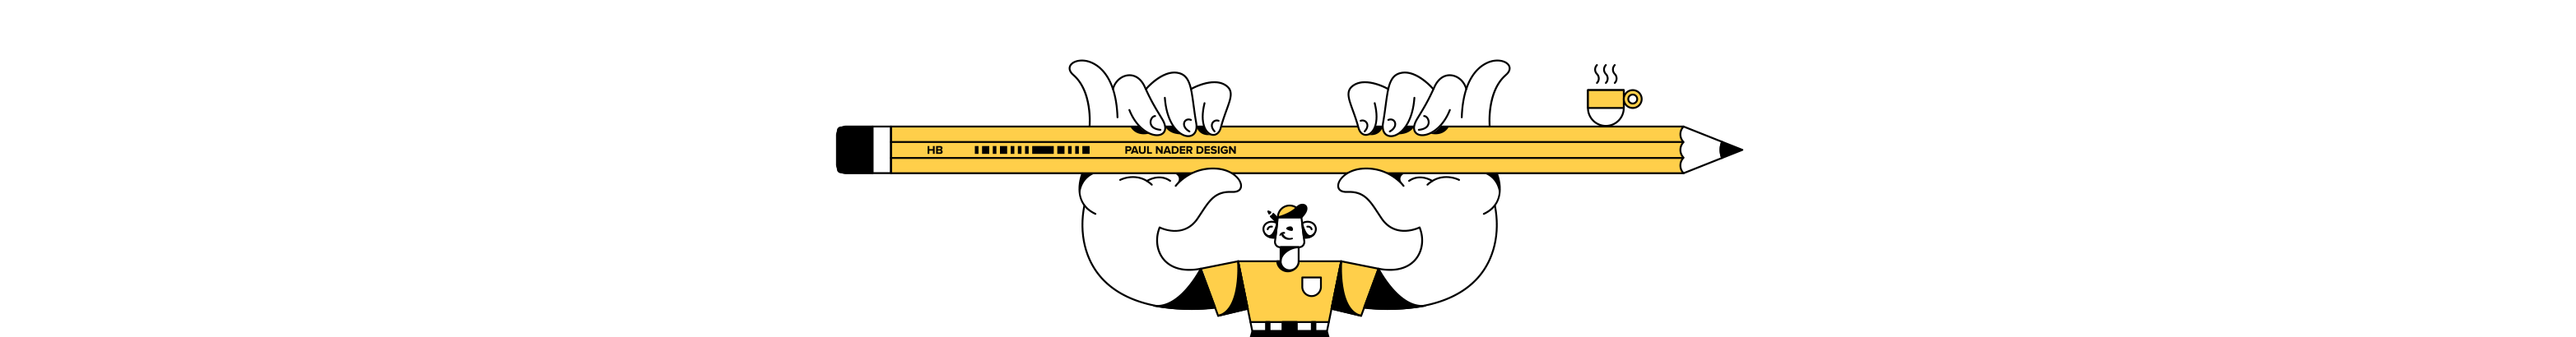 Paul Nader profil başlığı